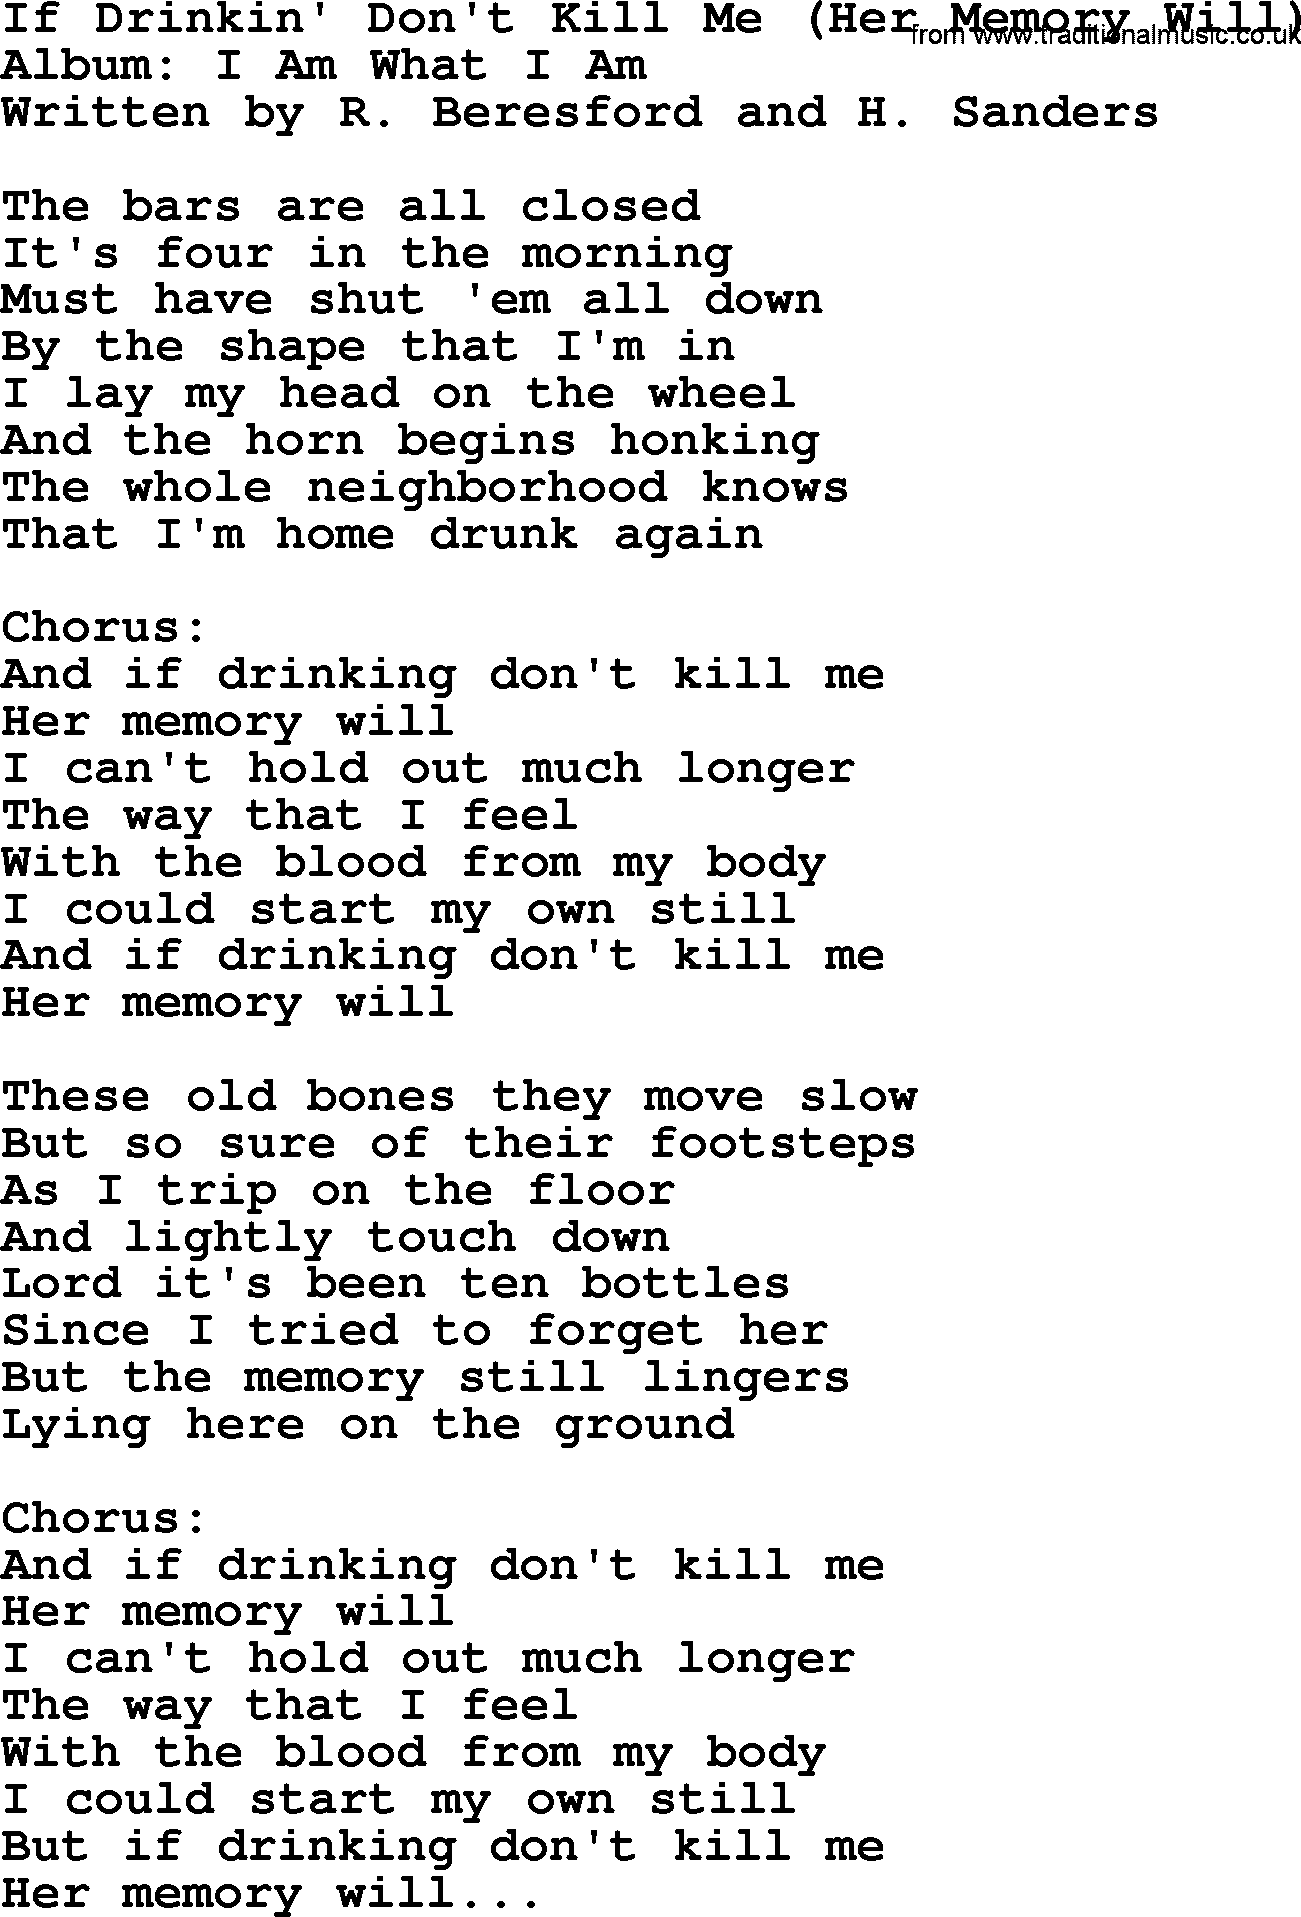 George Jones song: If Drinkin' Don't Kill Me (her Memory Will), lyrics